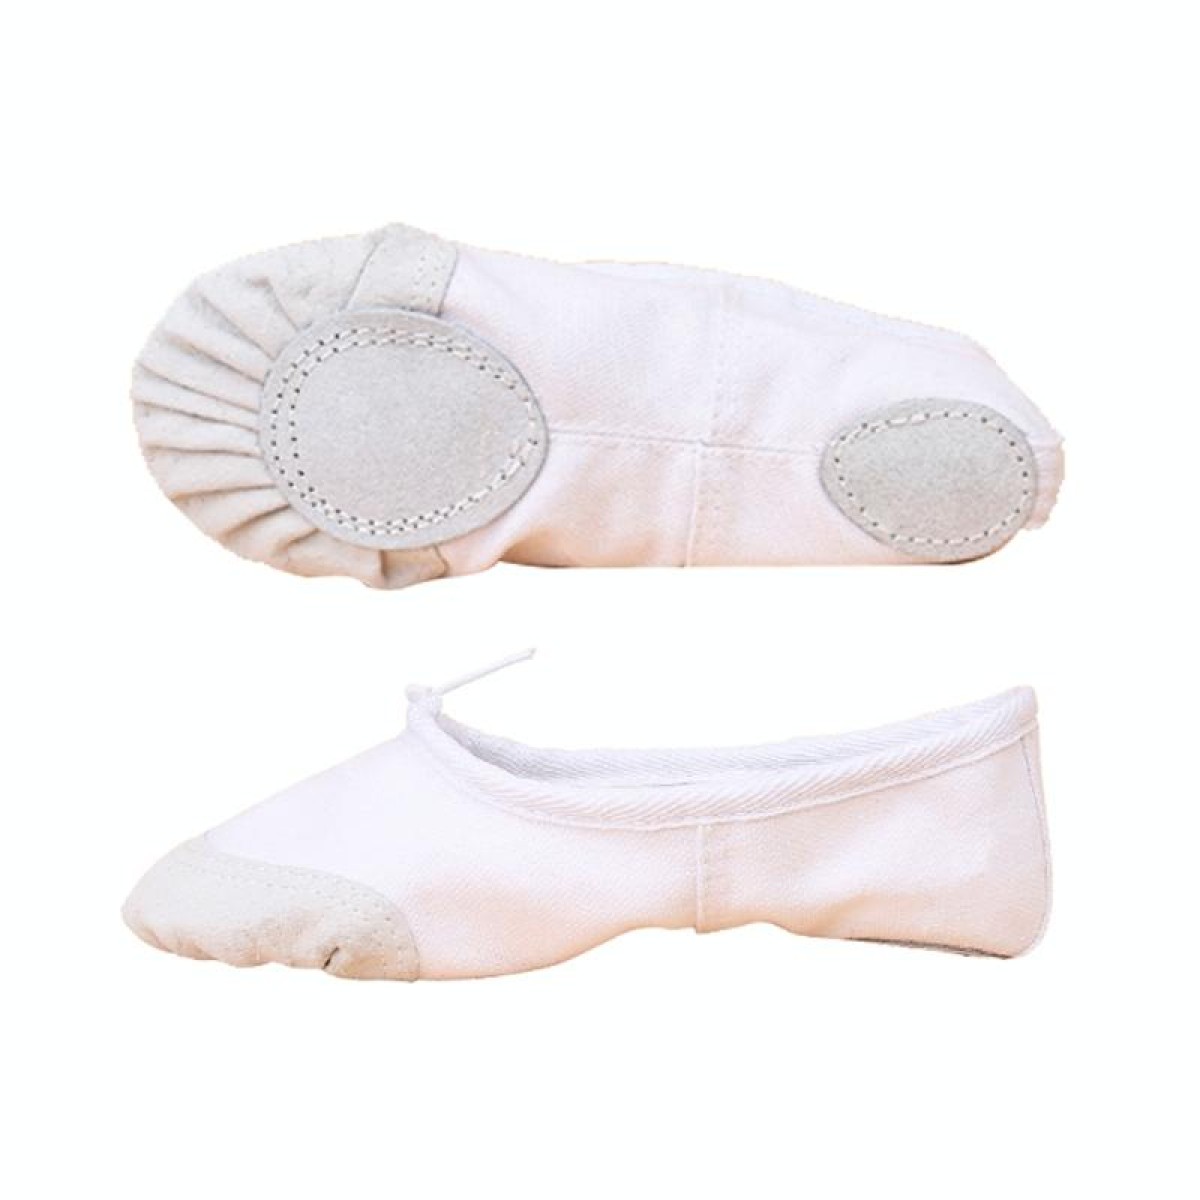 Flats Soft Ballet Shoes Latin Yoga Dance Sport Shoes for Children & Adult(White)